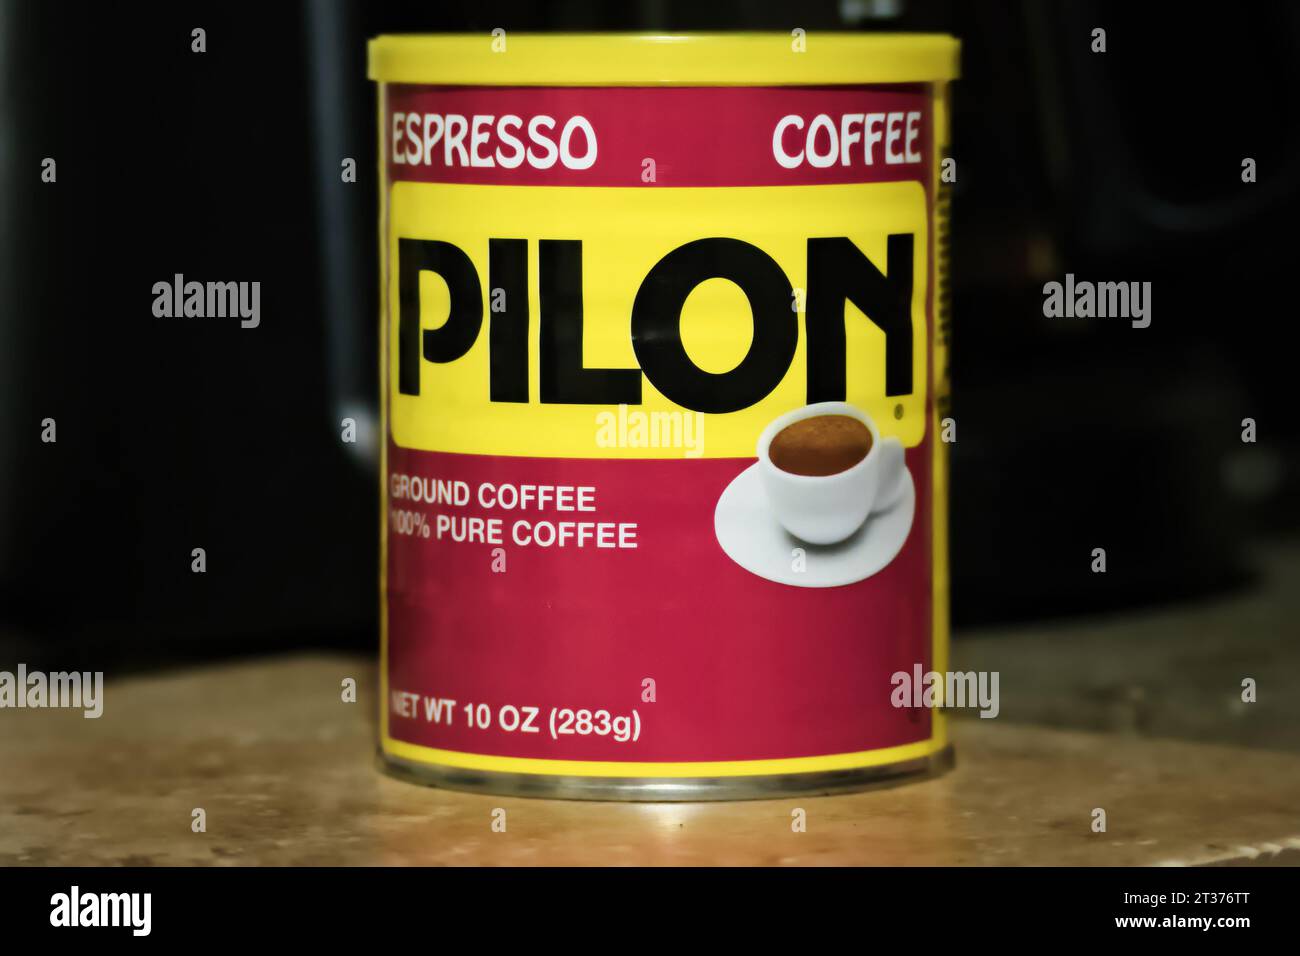 https://c8.alamy.com/comp/2T376TT/bronx-ny-sept-28-2023-pilon-brand-espresso-ground-coffee-metal-tin-pilon-is-traditional-cuban-style-coffee-produced-by-rowland-coffee-roasters-2T376TT.jpg